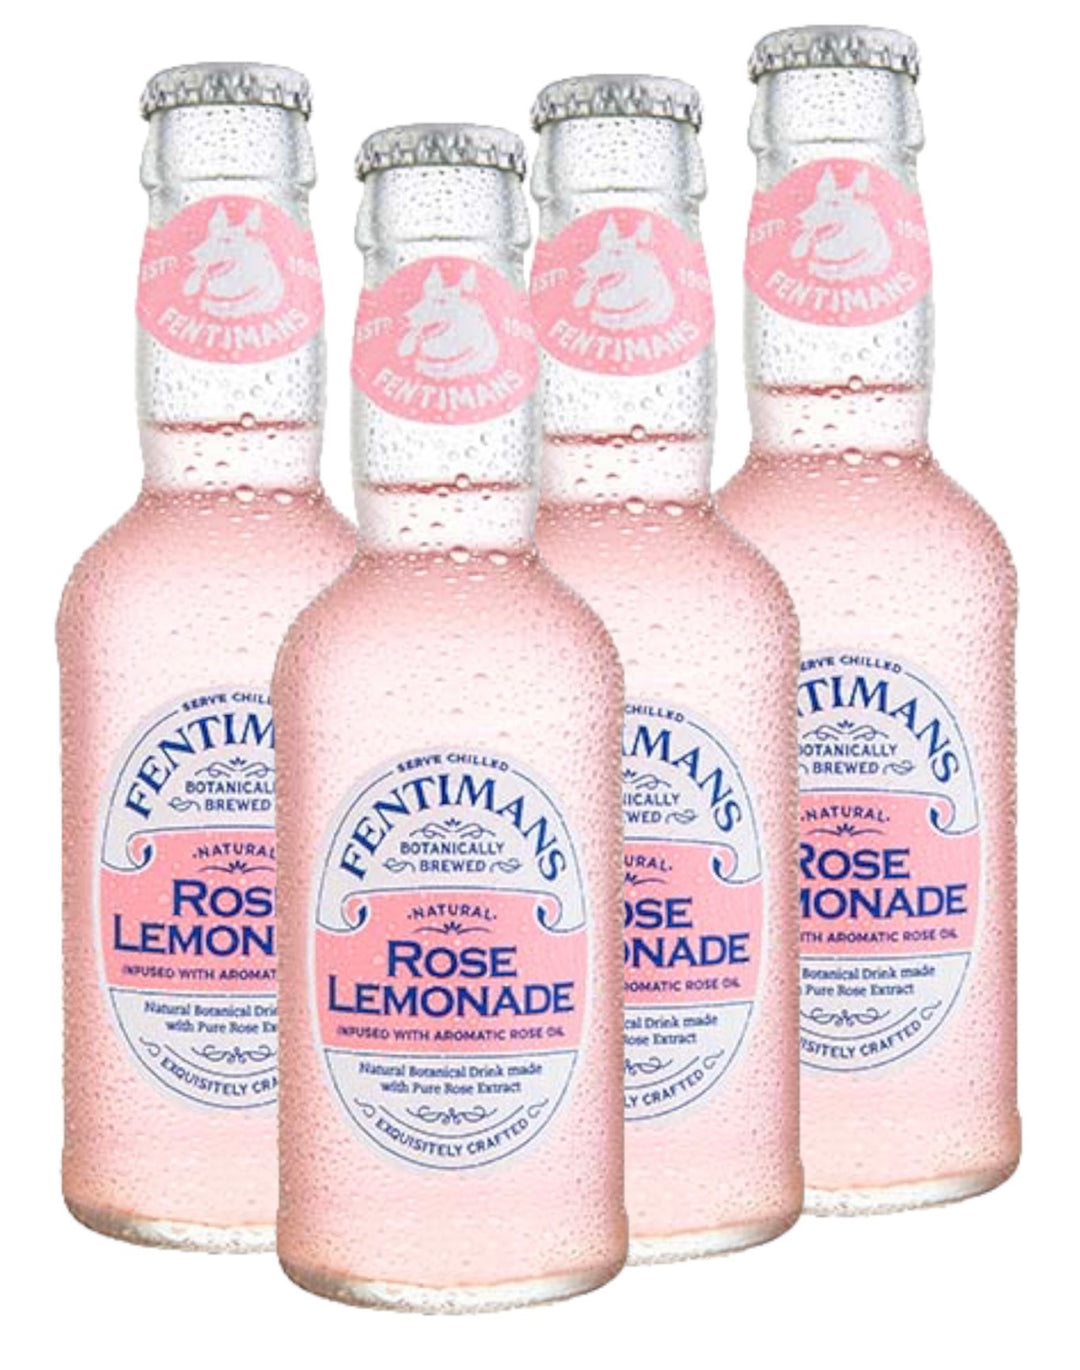 Fentimans - Rose Lemonade 4 pack